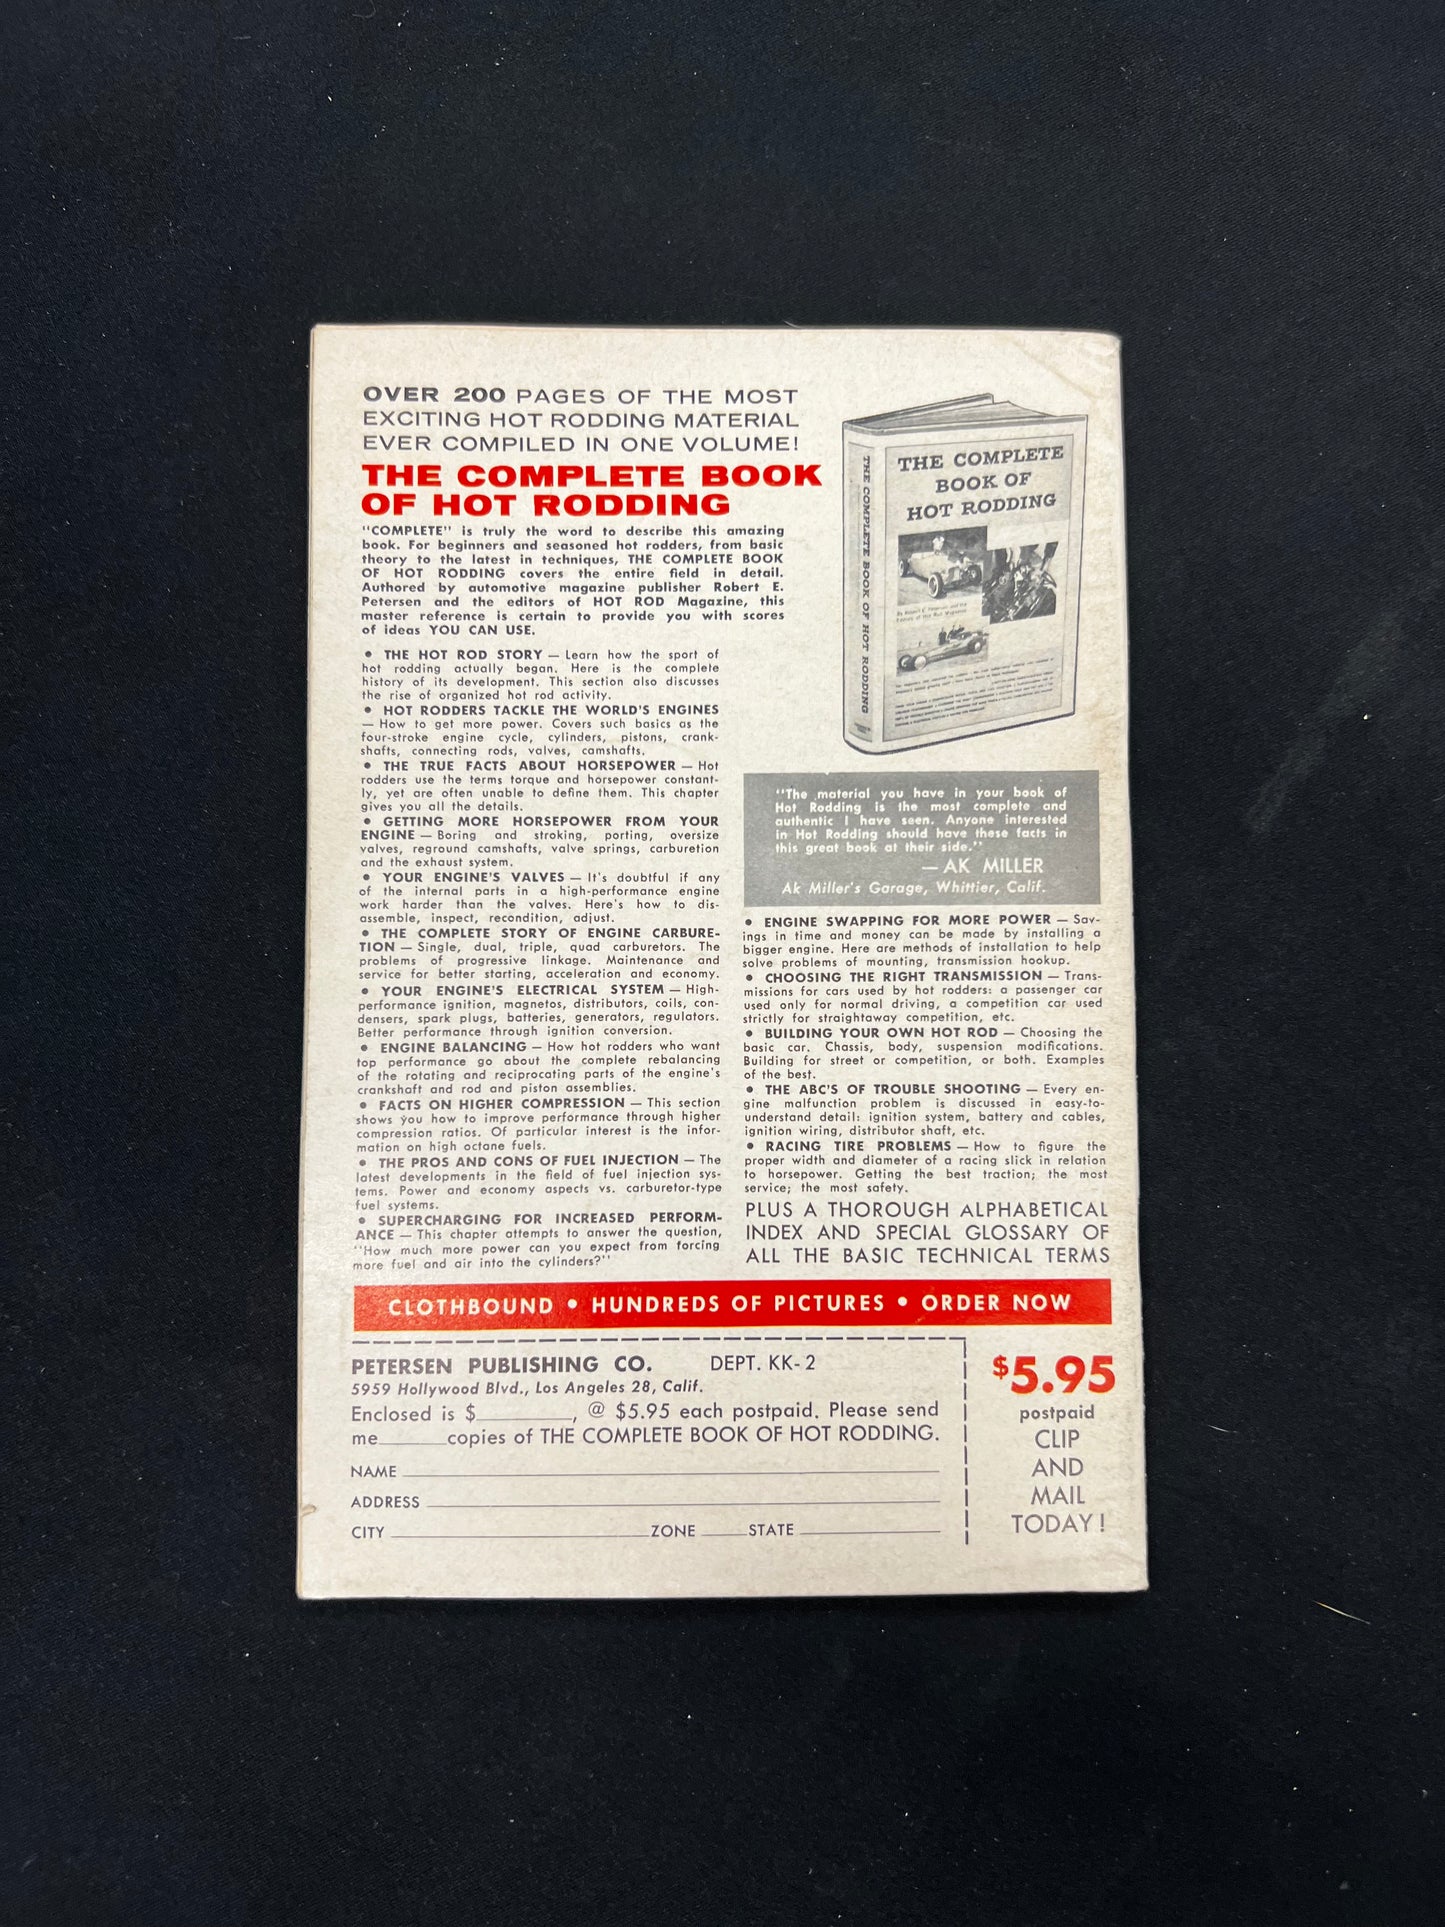 Custom Cars Magazine July 1959